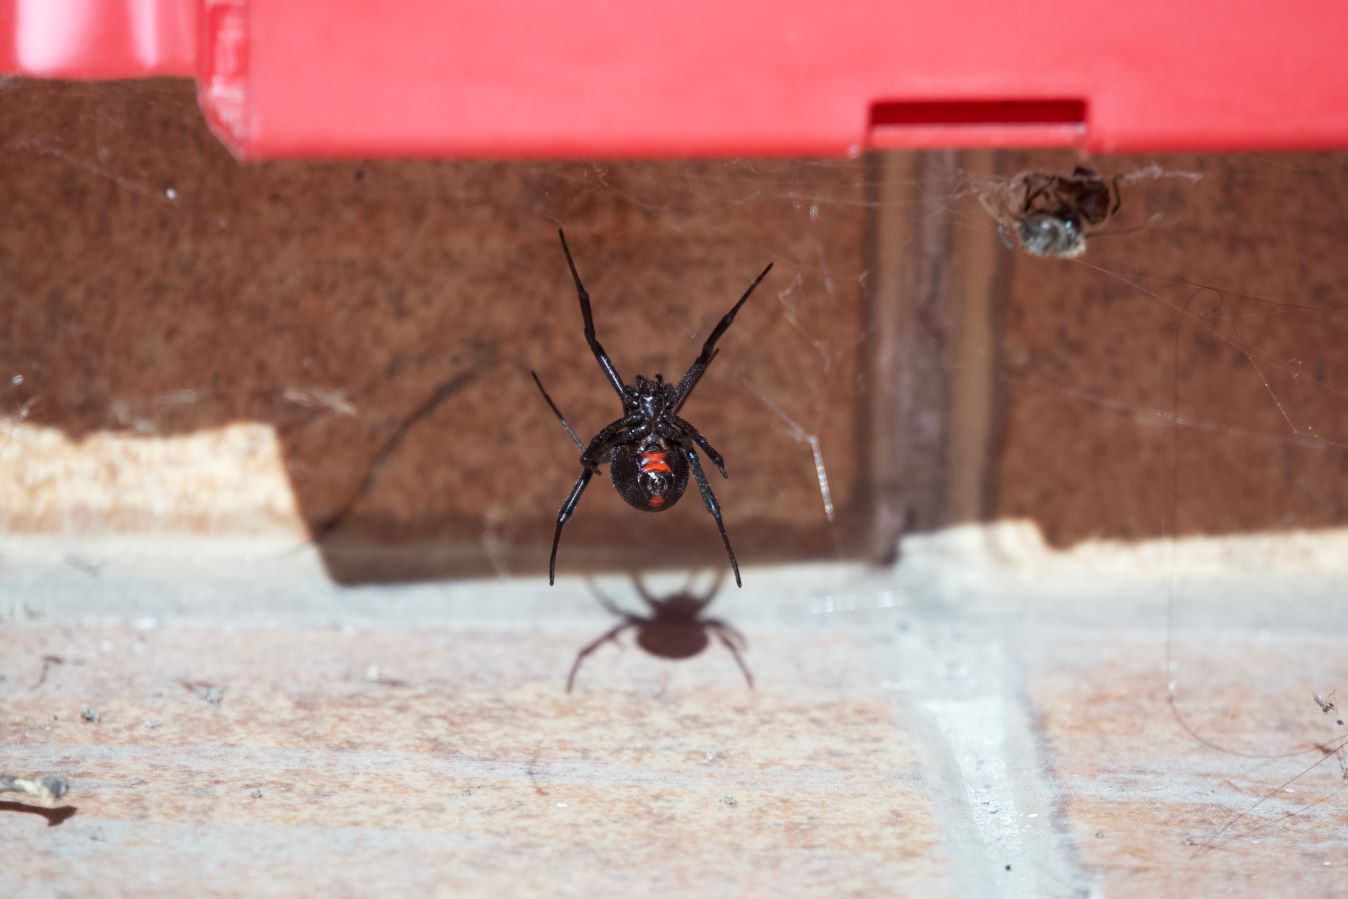 Poisonous Spidersin Michigan in your area